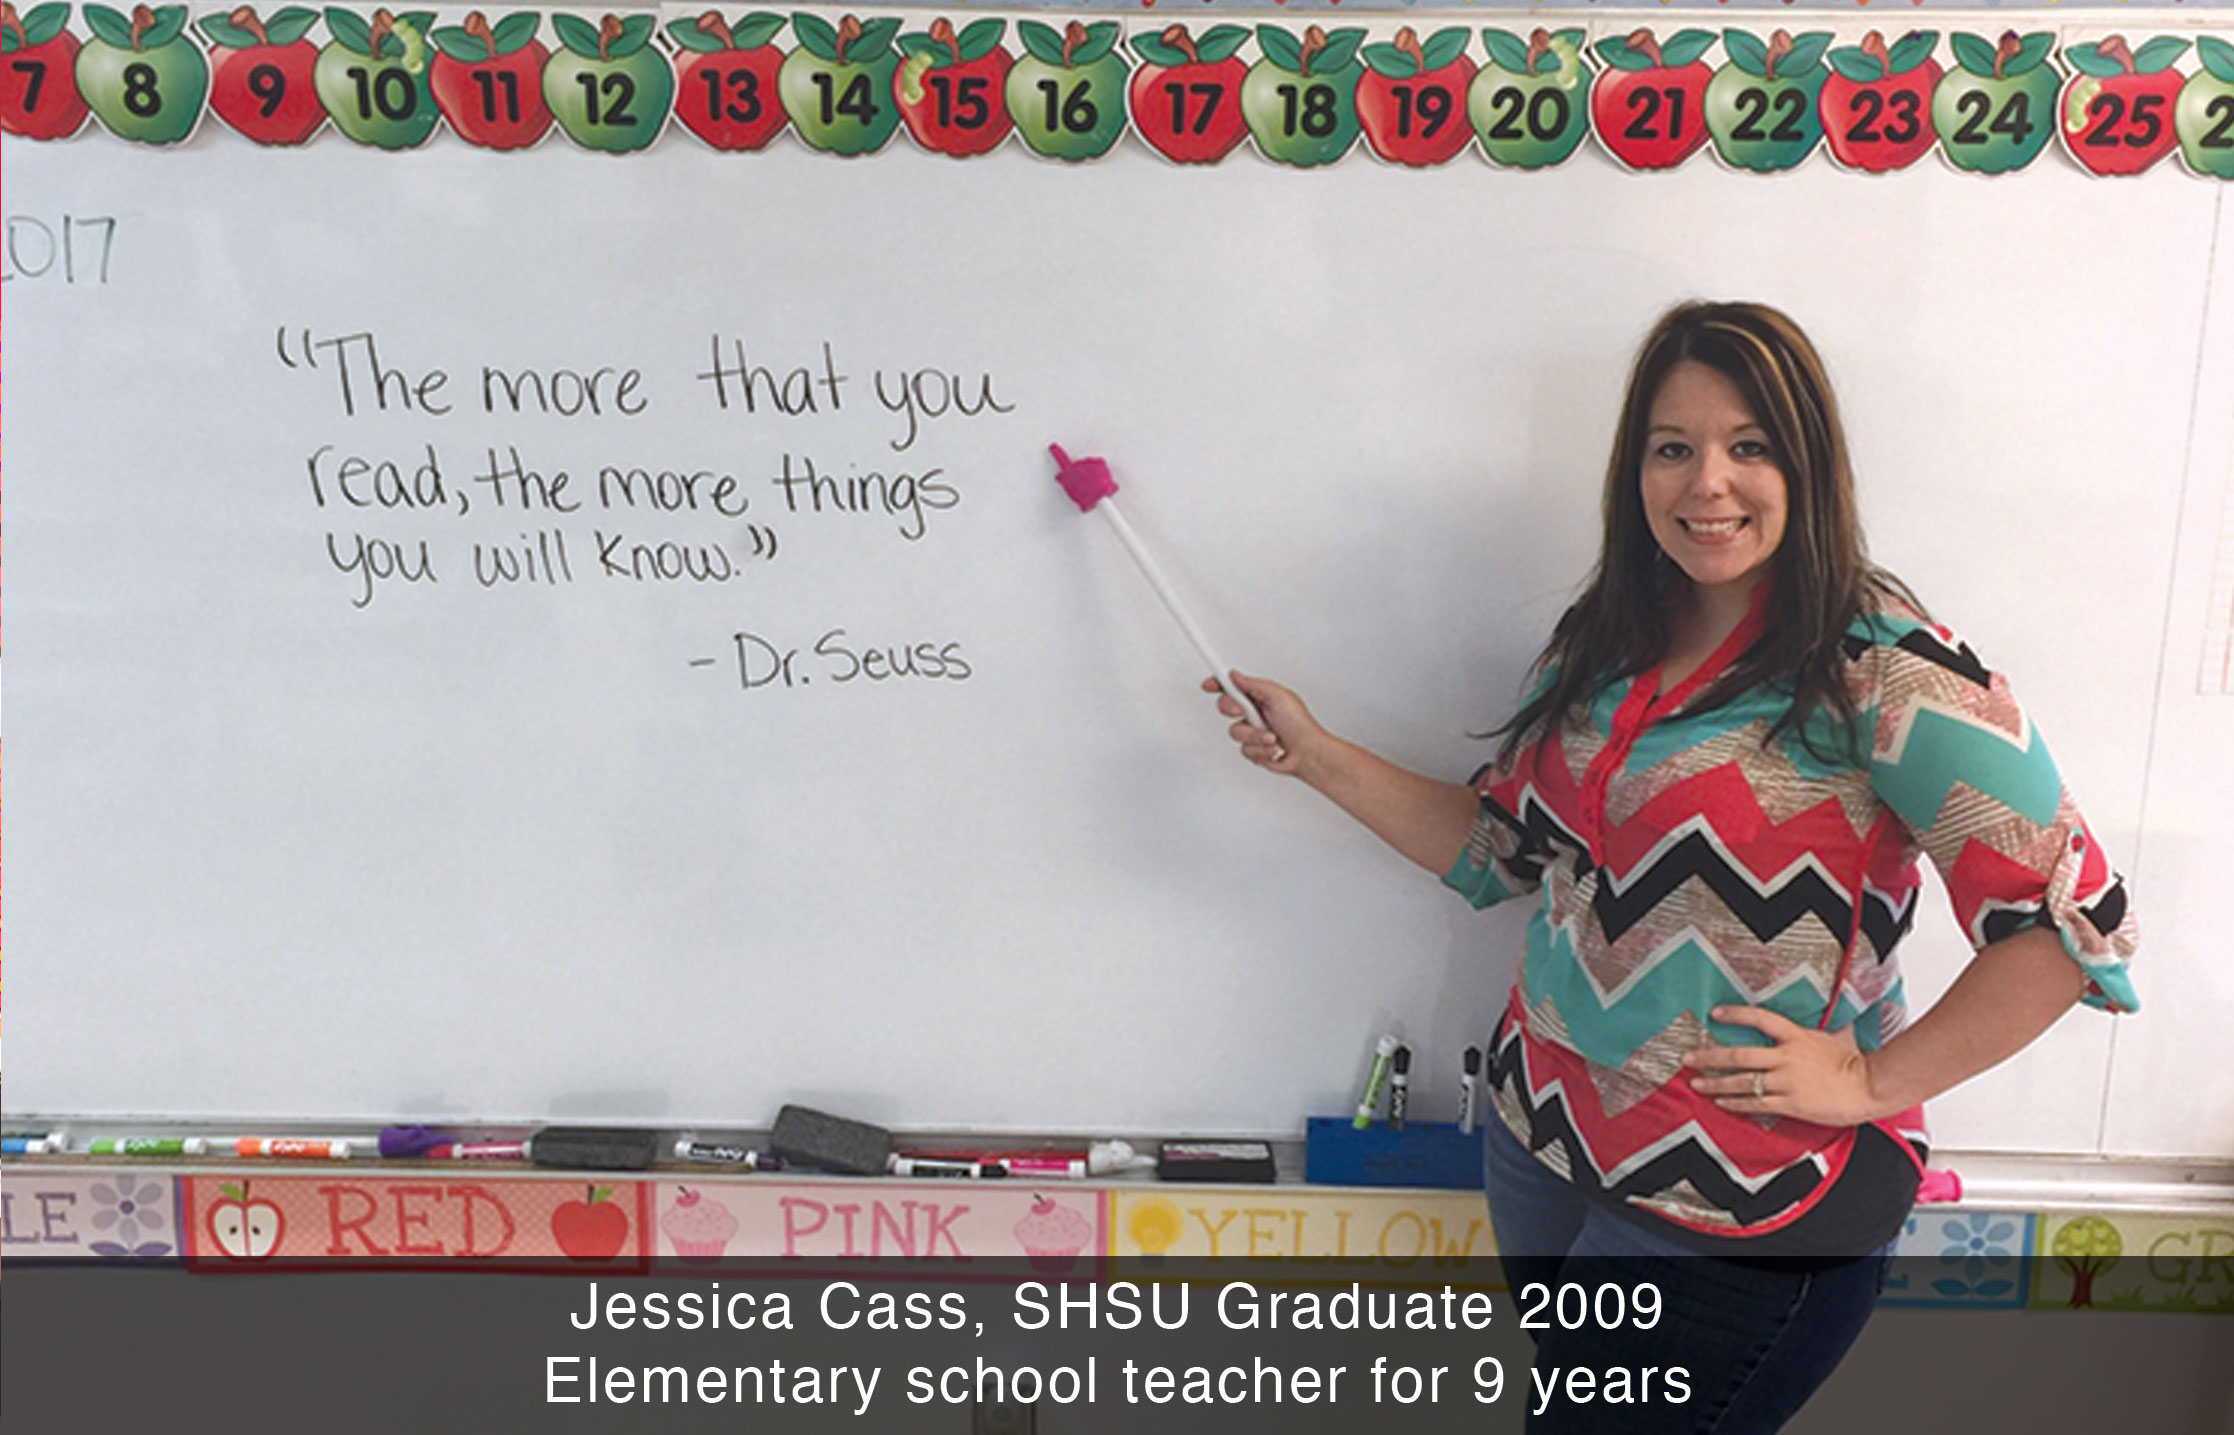 Jessica Cass, SHSU Graduate 2009, Elementary school teacher for 9 years